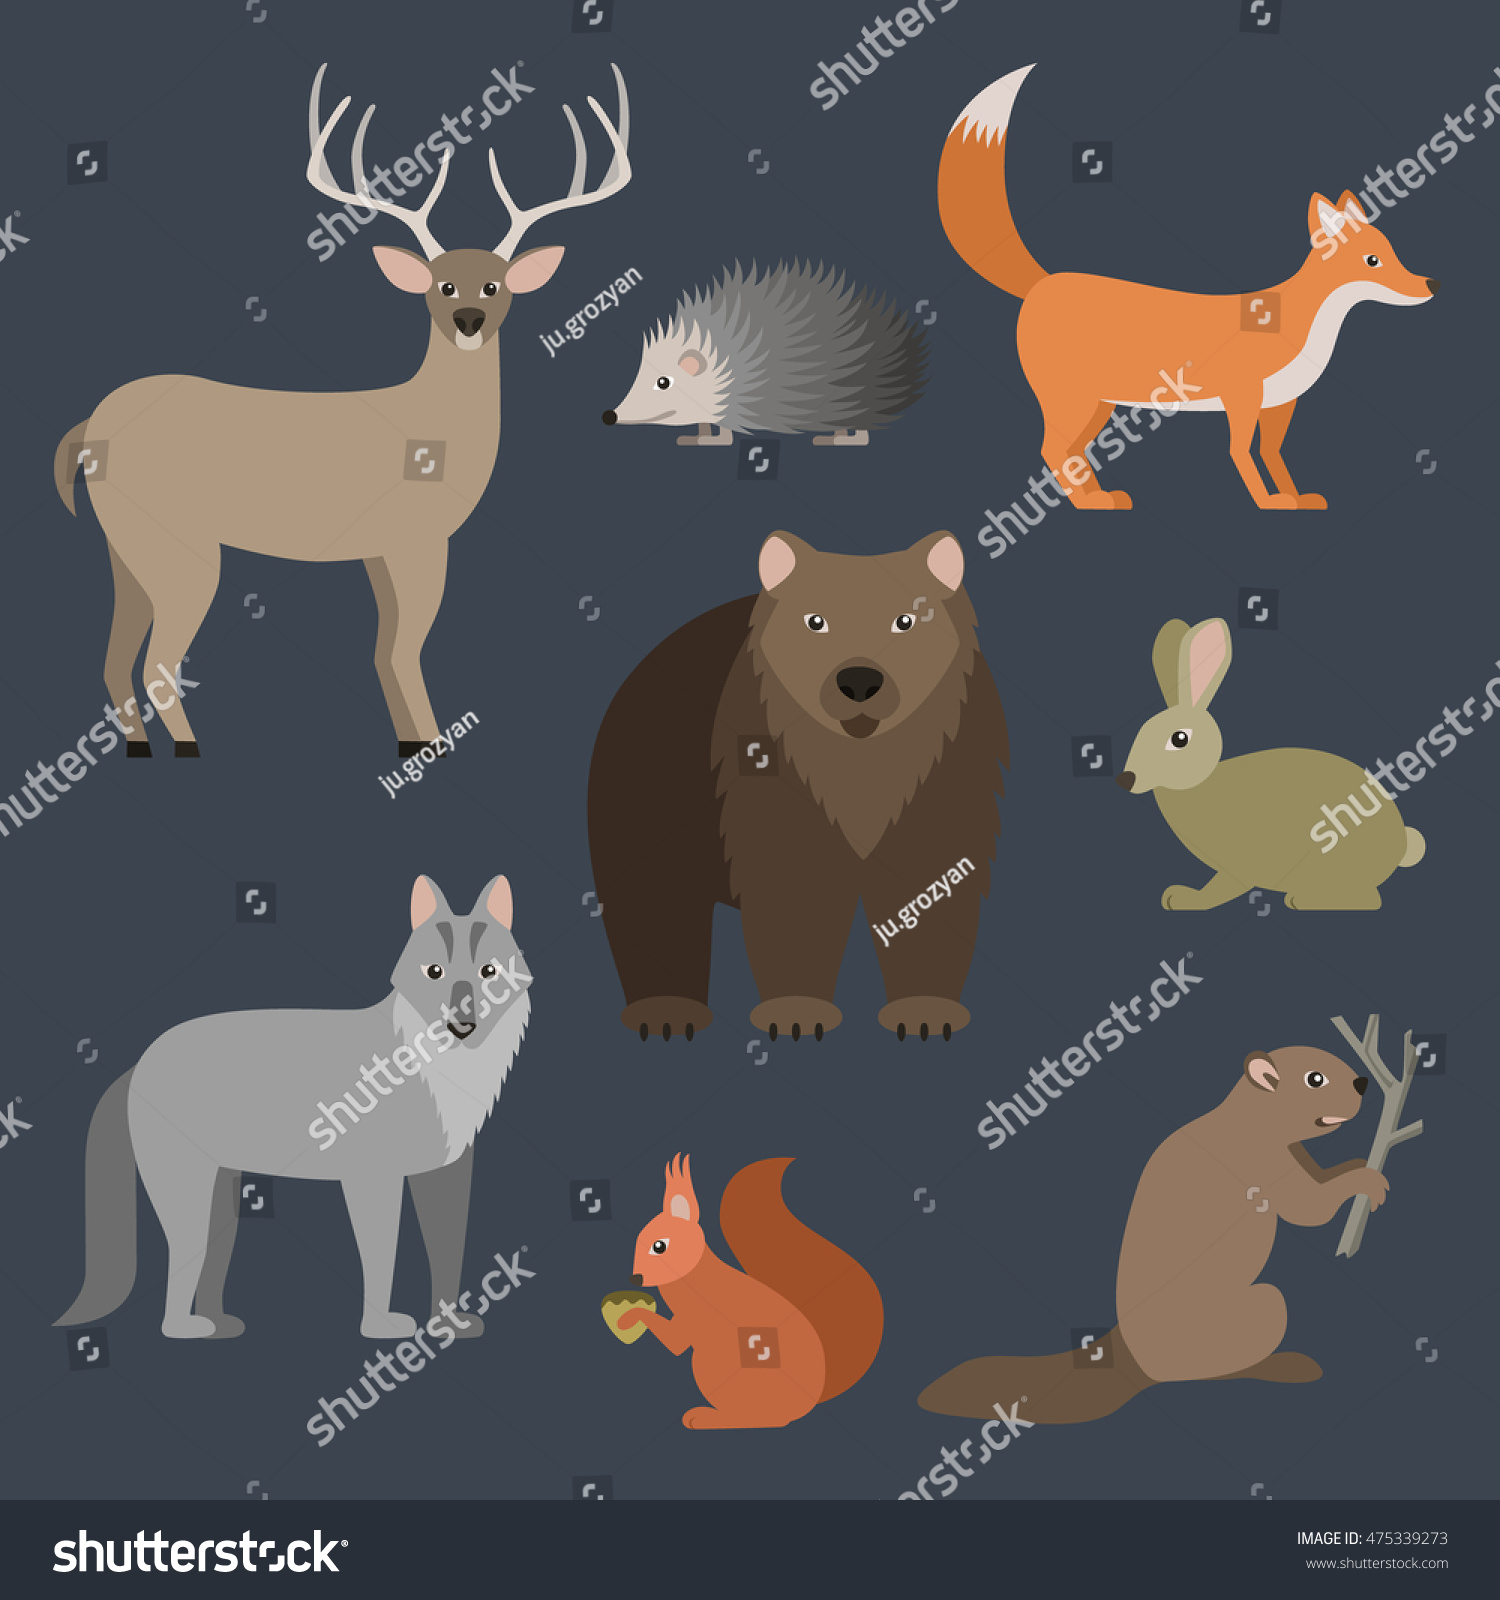 Forest Animals Vector Set. - 475339273 : Shutterstock